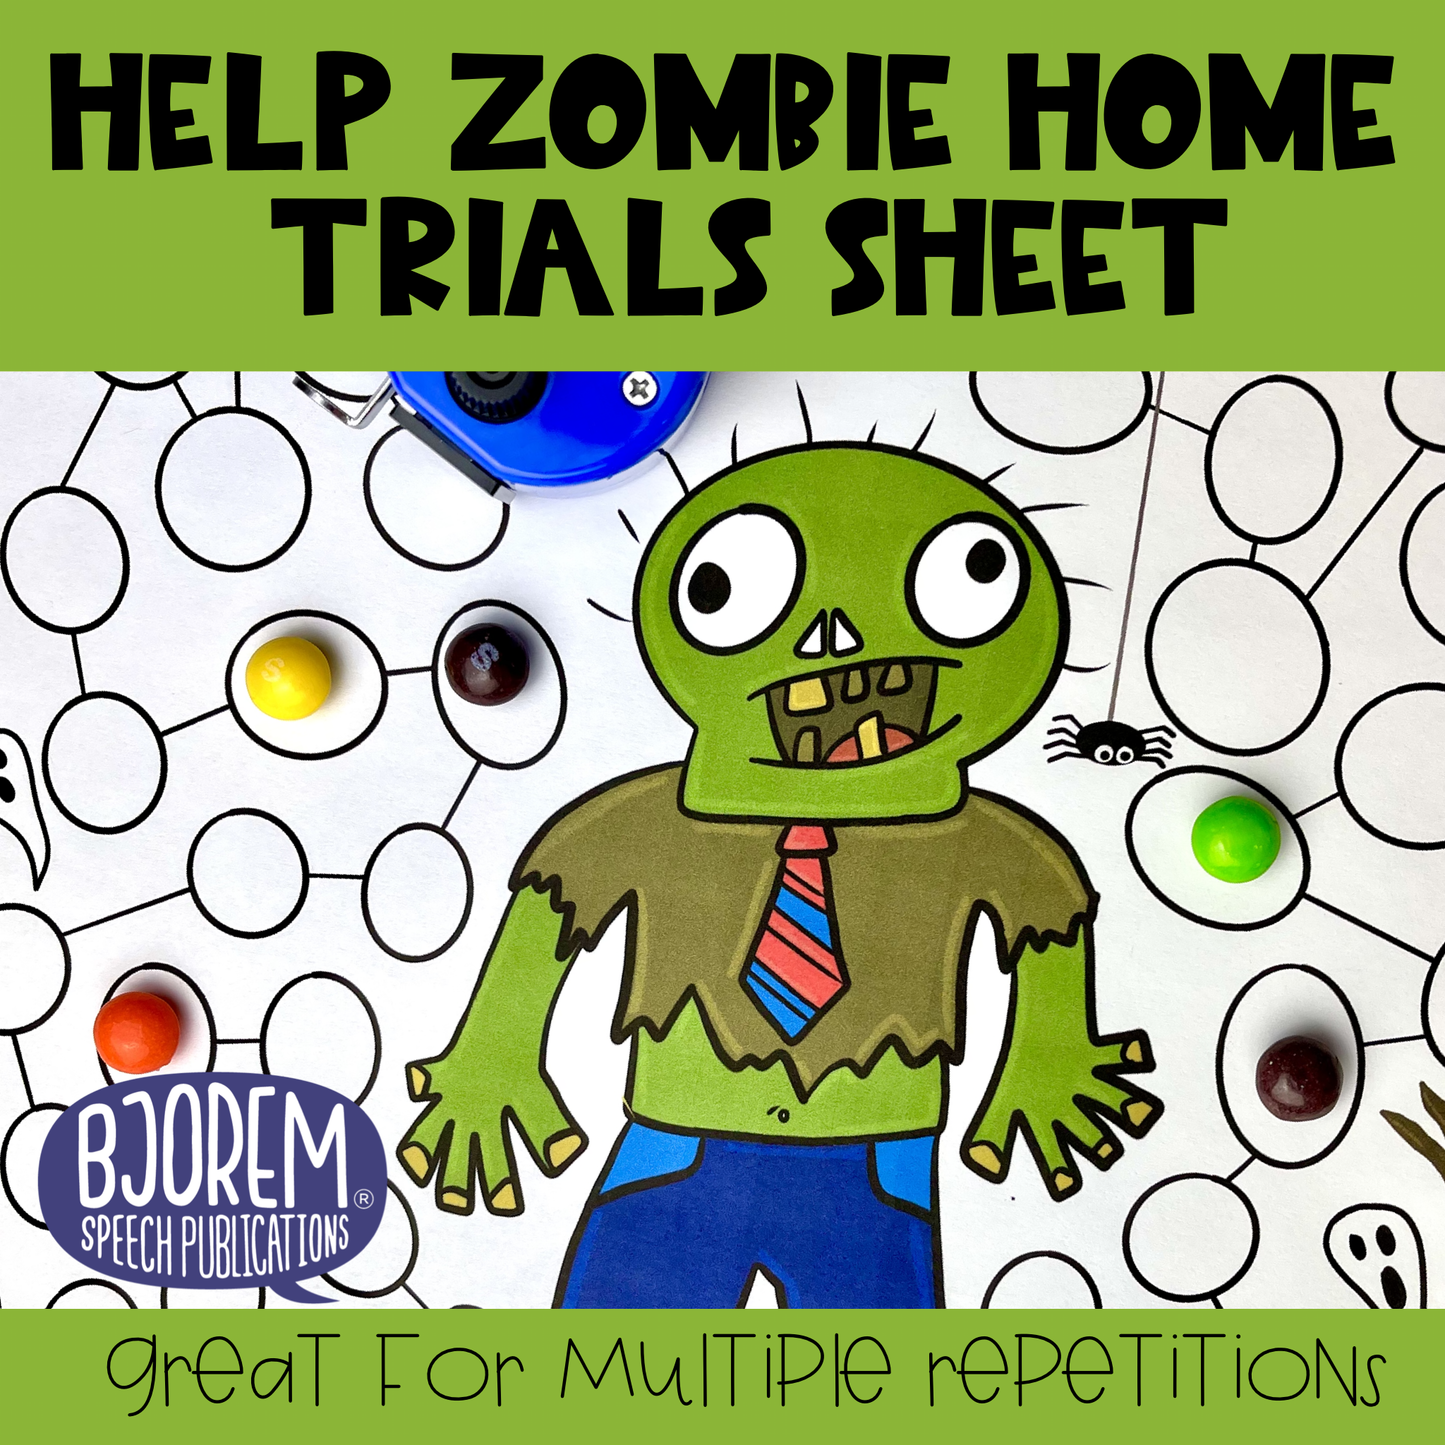 Zombie Trials Sheet